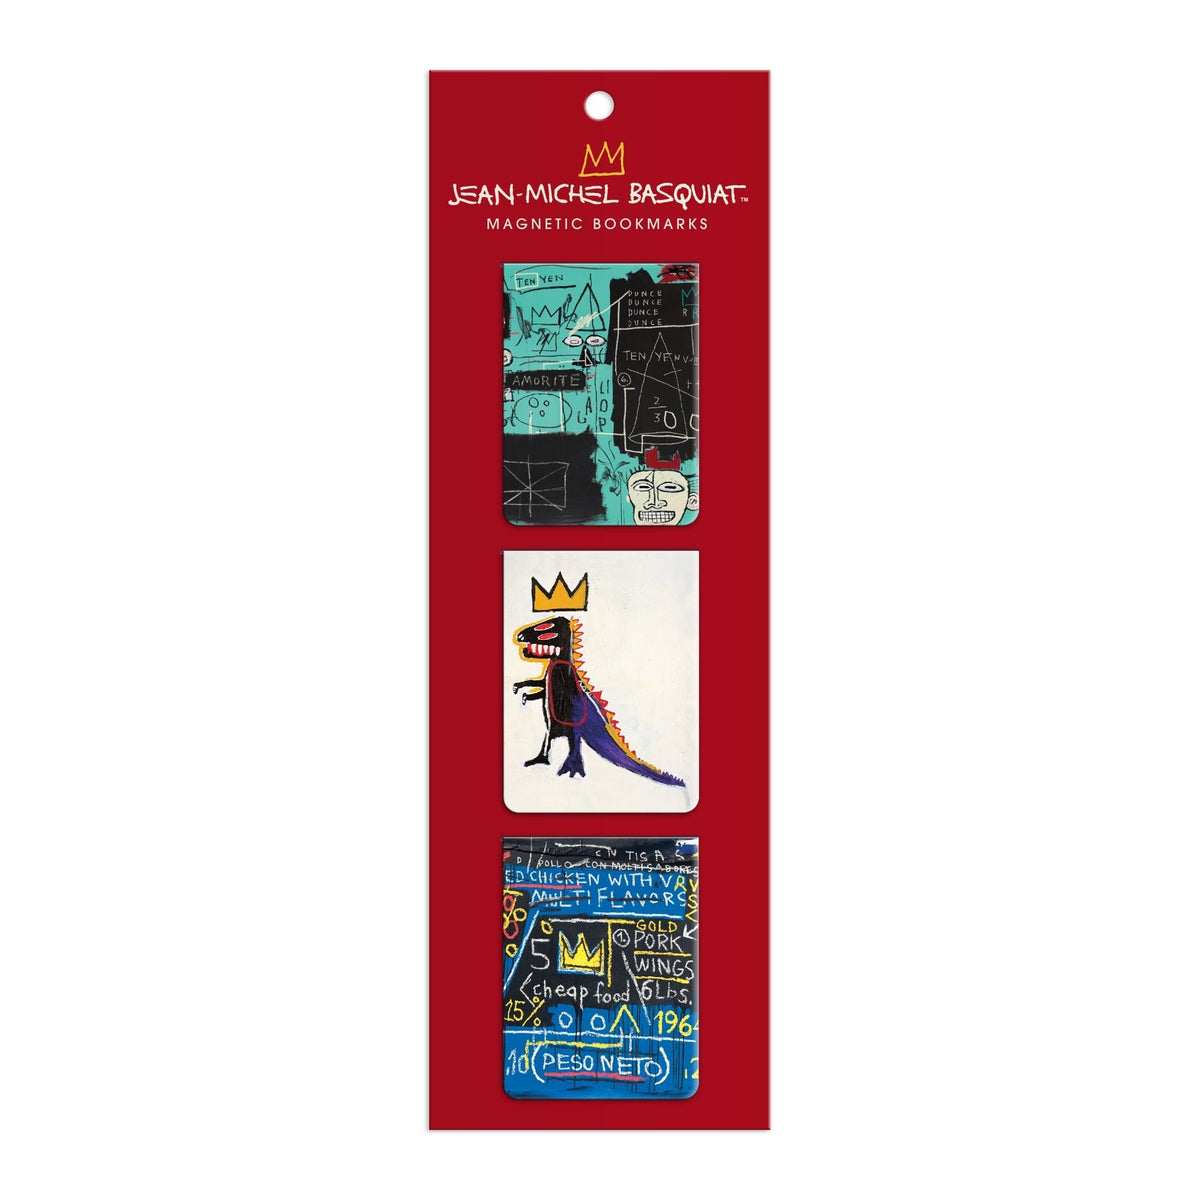 Basquiat Magnetic Bookmarks Jean-Michel Basquiat 